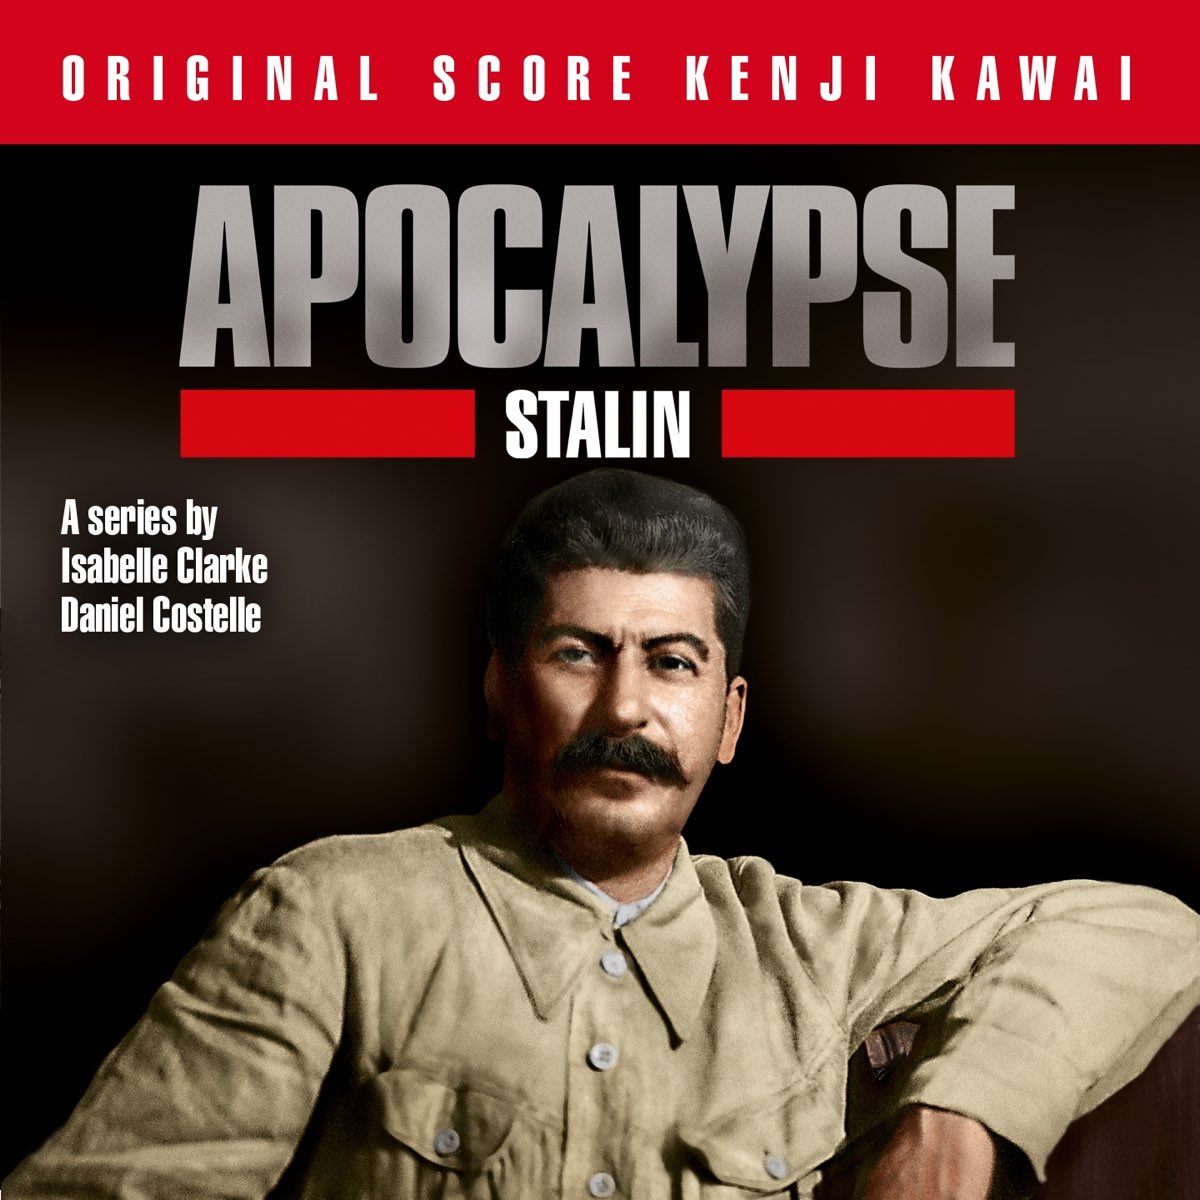 Apocalypse Stalin Isabelle Clarke And Daniel Costelle S Series Original Score By Kenji Kawai On Apple Music